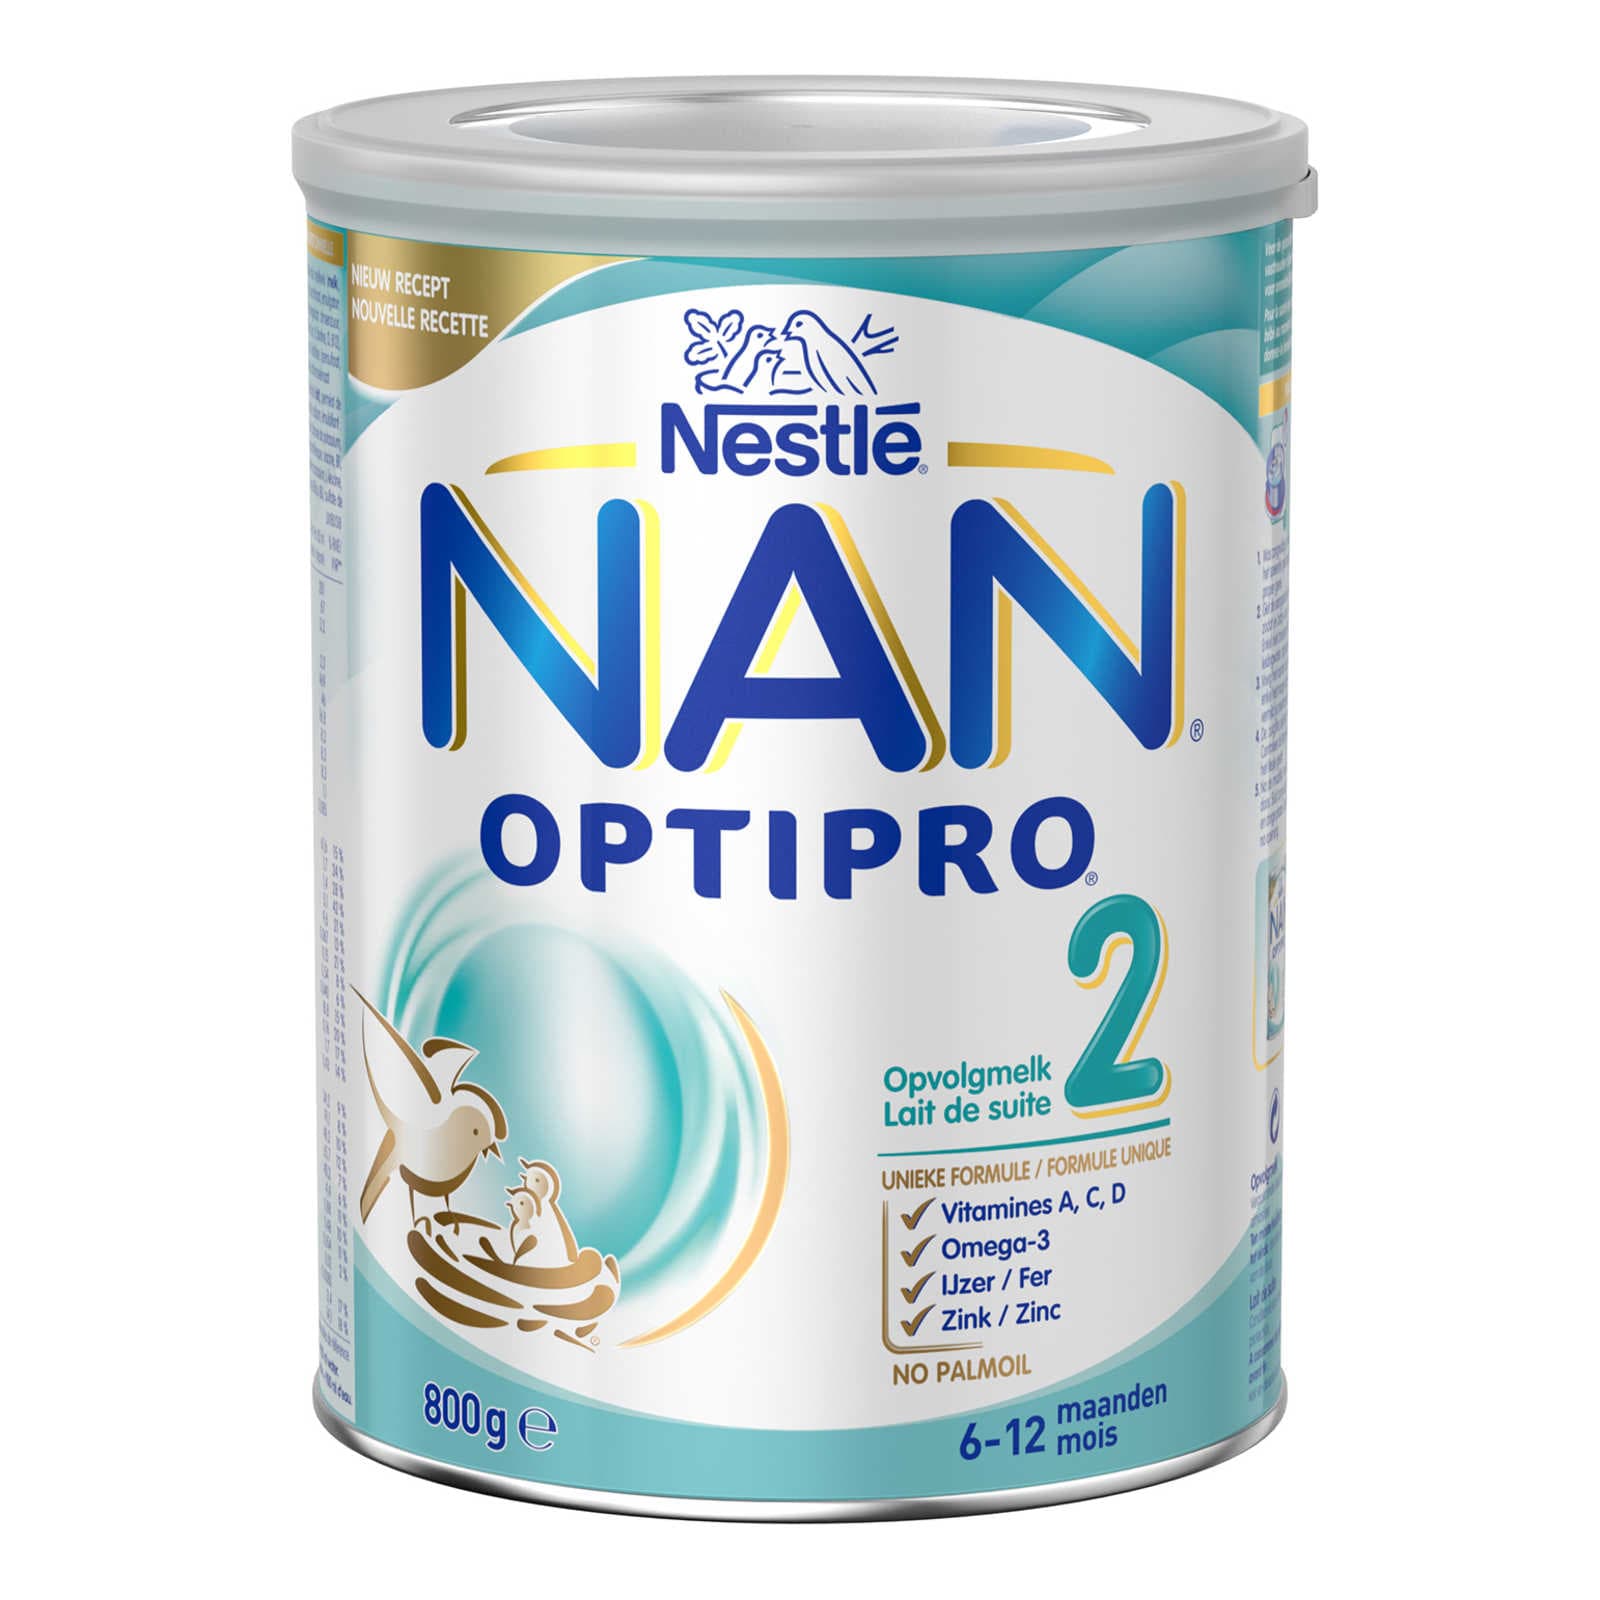 Nestlé-Nan Optipro